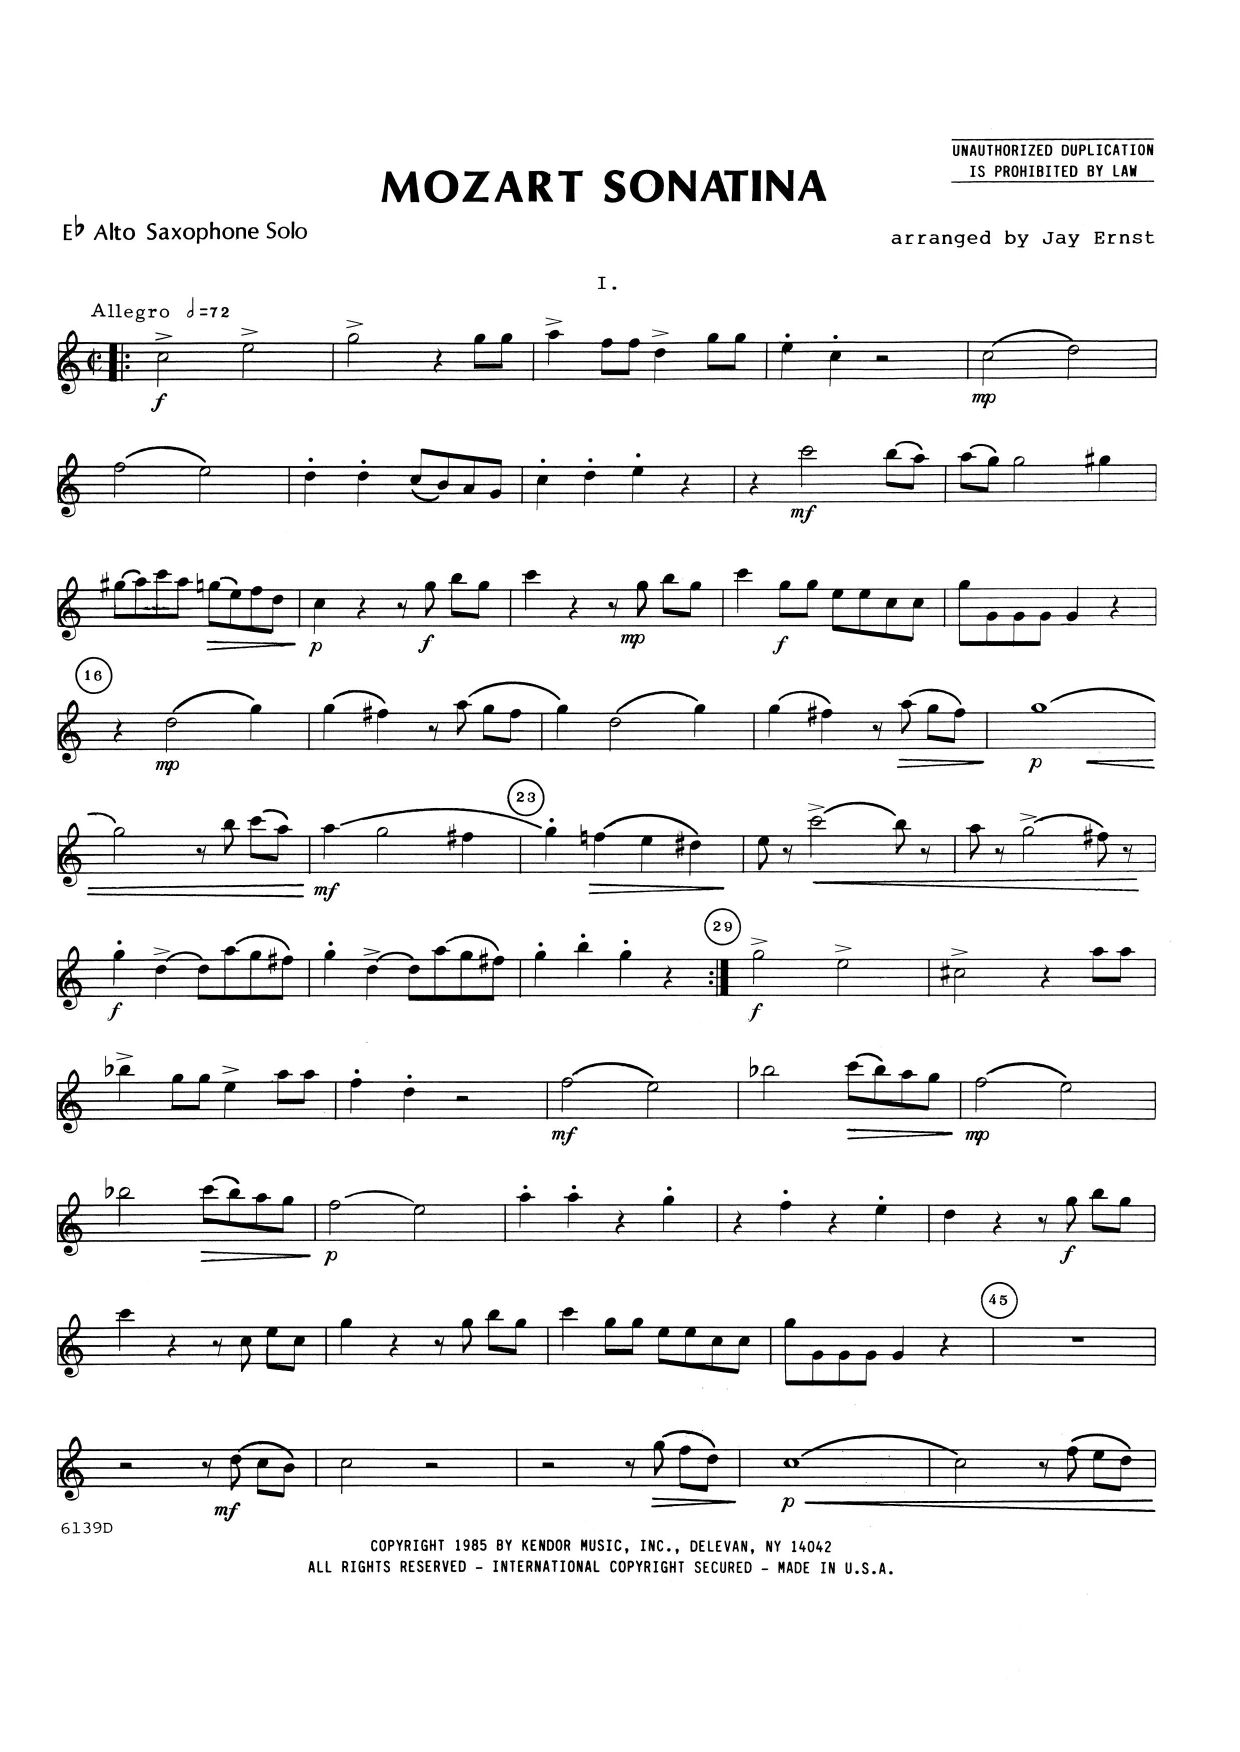 Download Jay Ernst Mozart Sonatina (K. 439B) - Eb Alto Sax Sheet Music